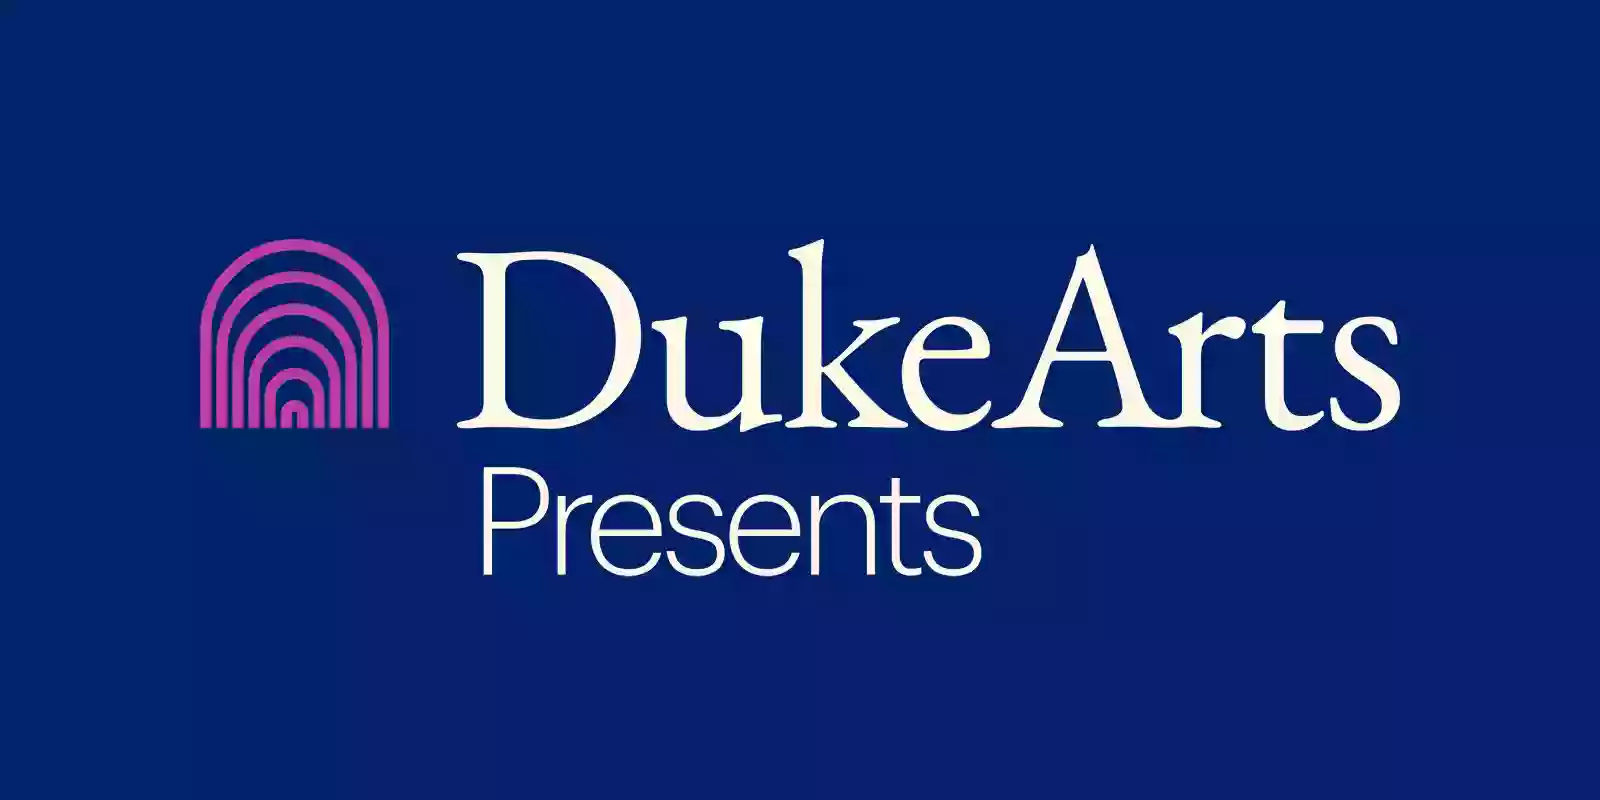 Duke Performances